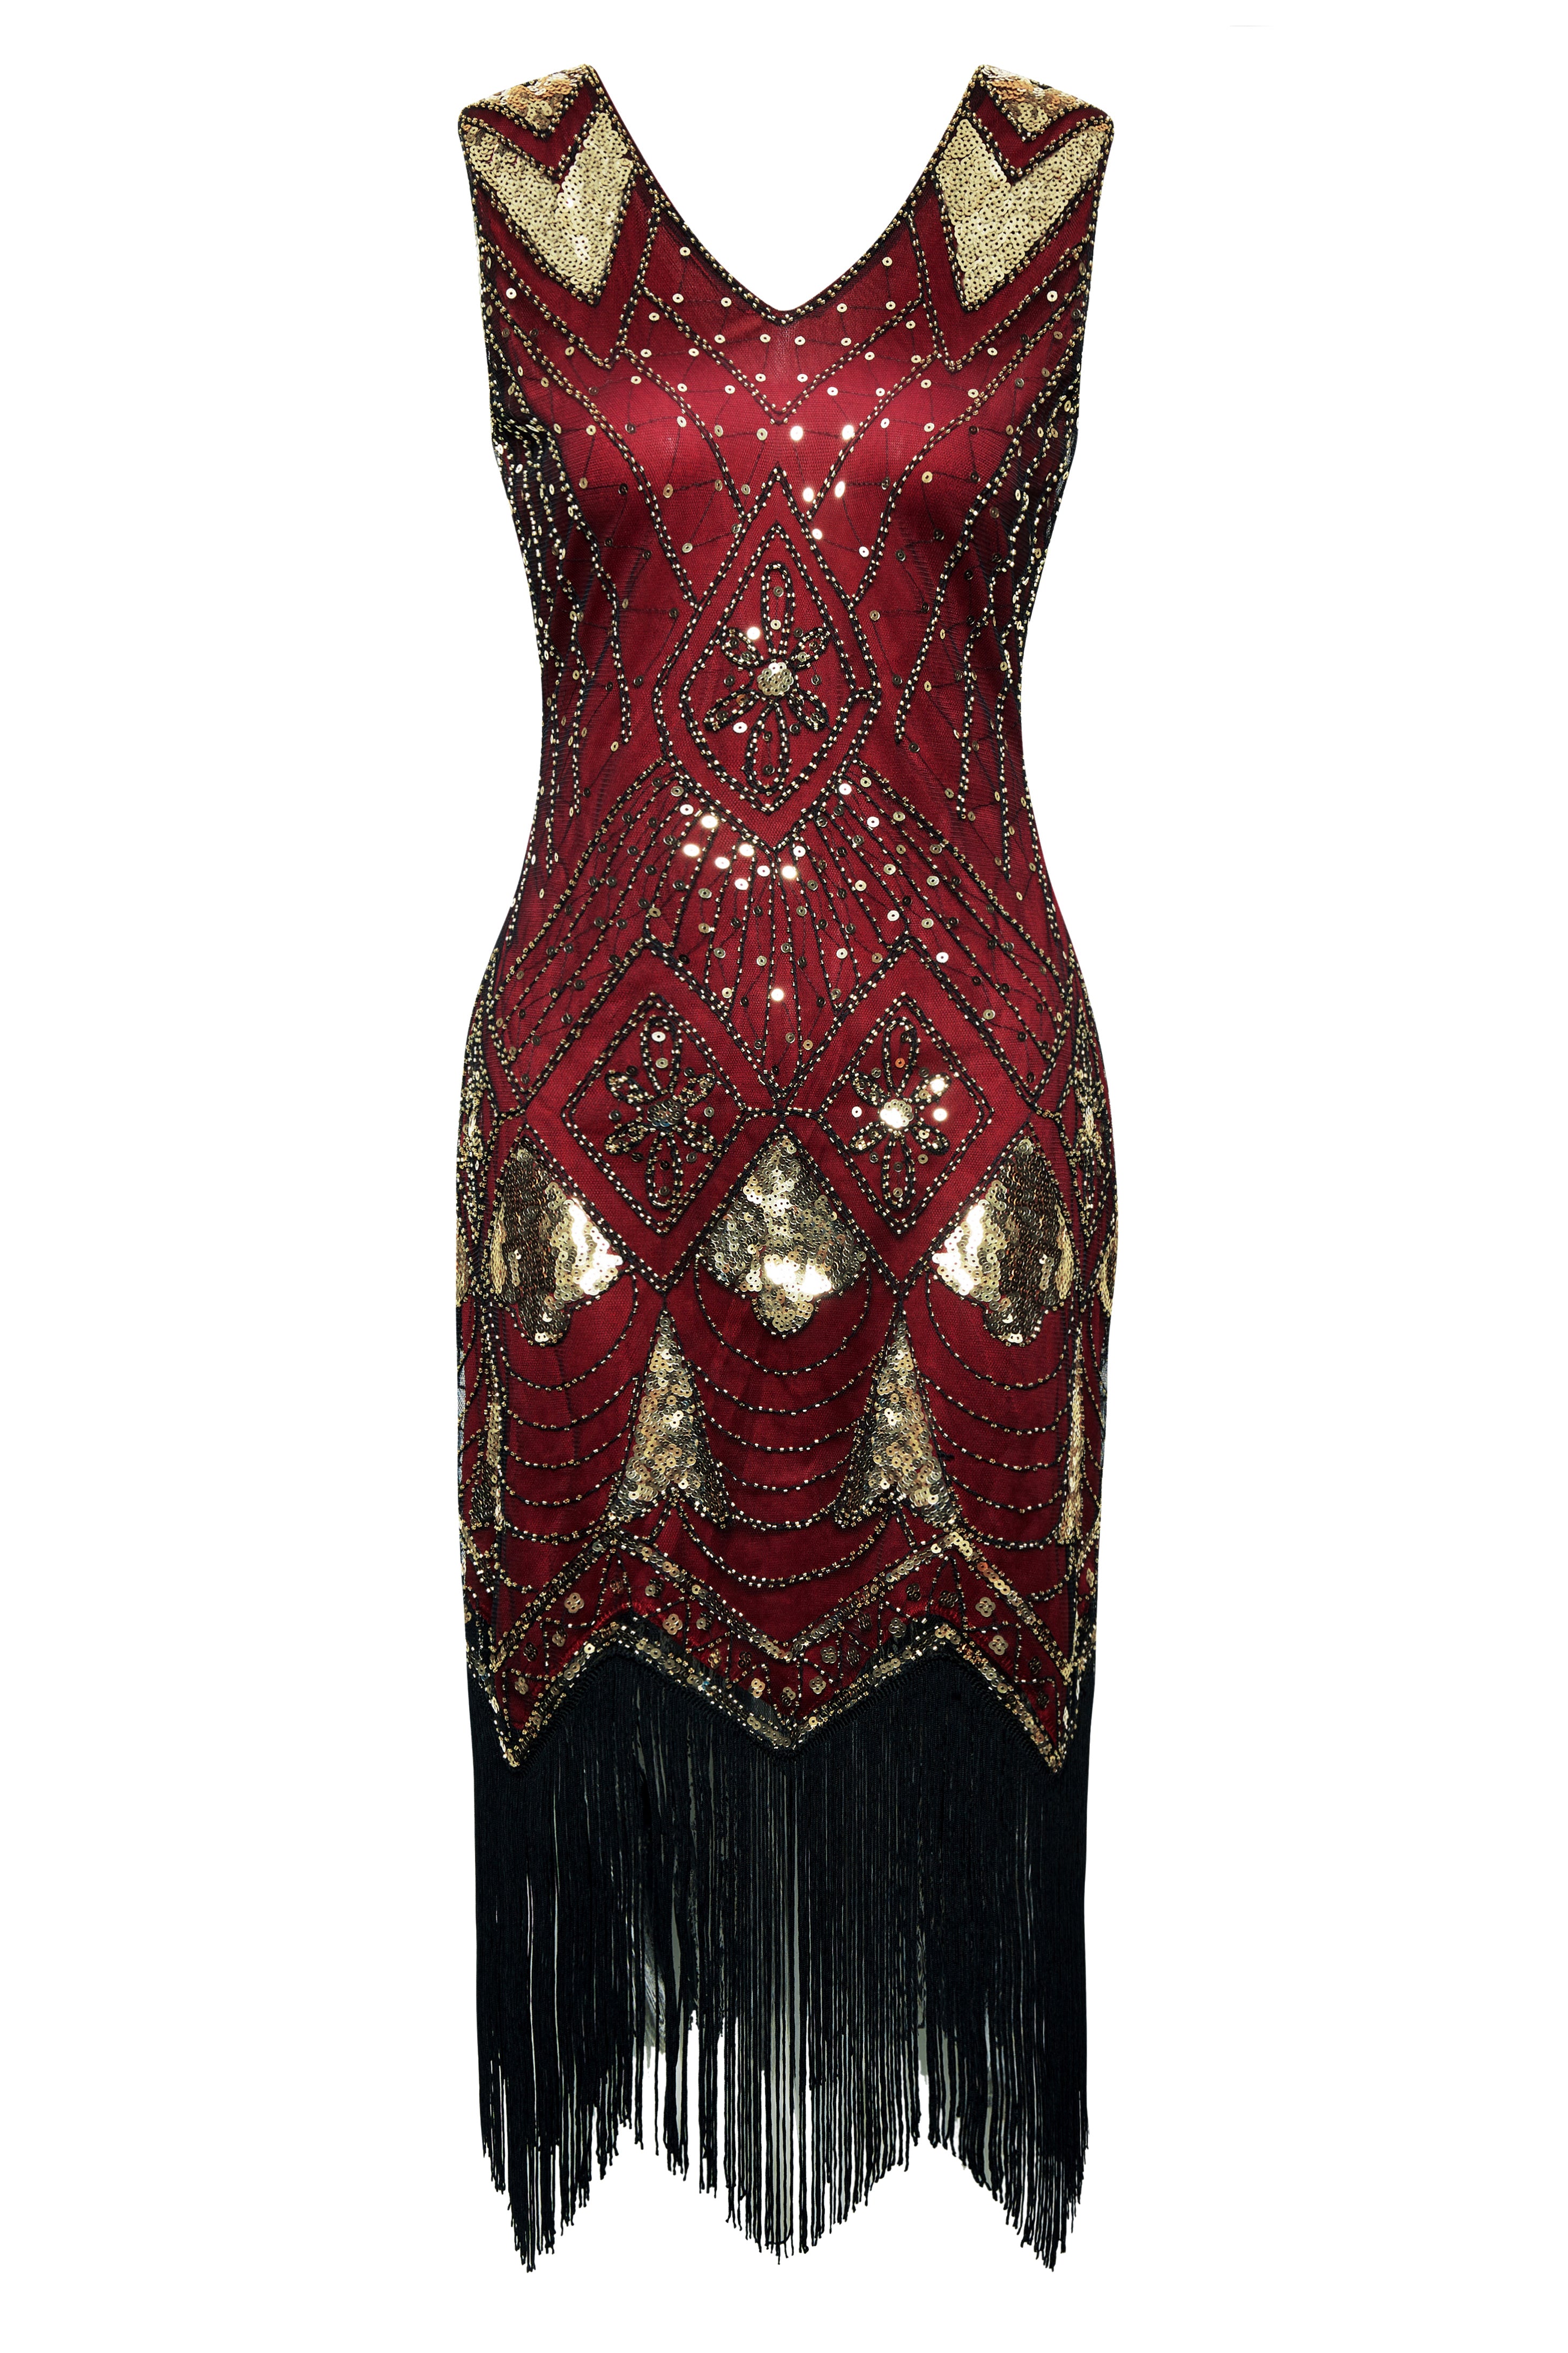 Shop 1920s Dresses - Sequin Beaded Bodycon Dress | BABEYOND